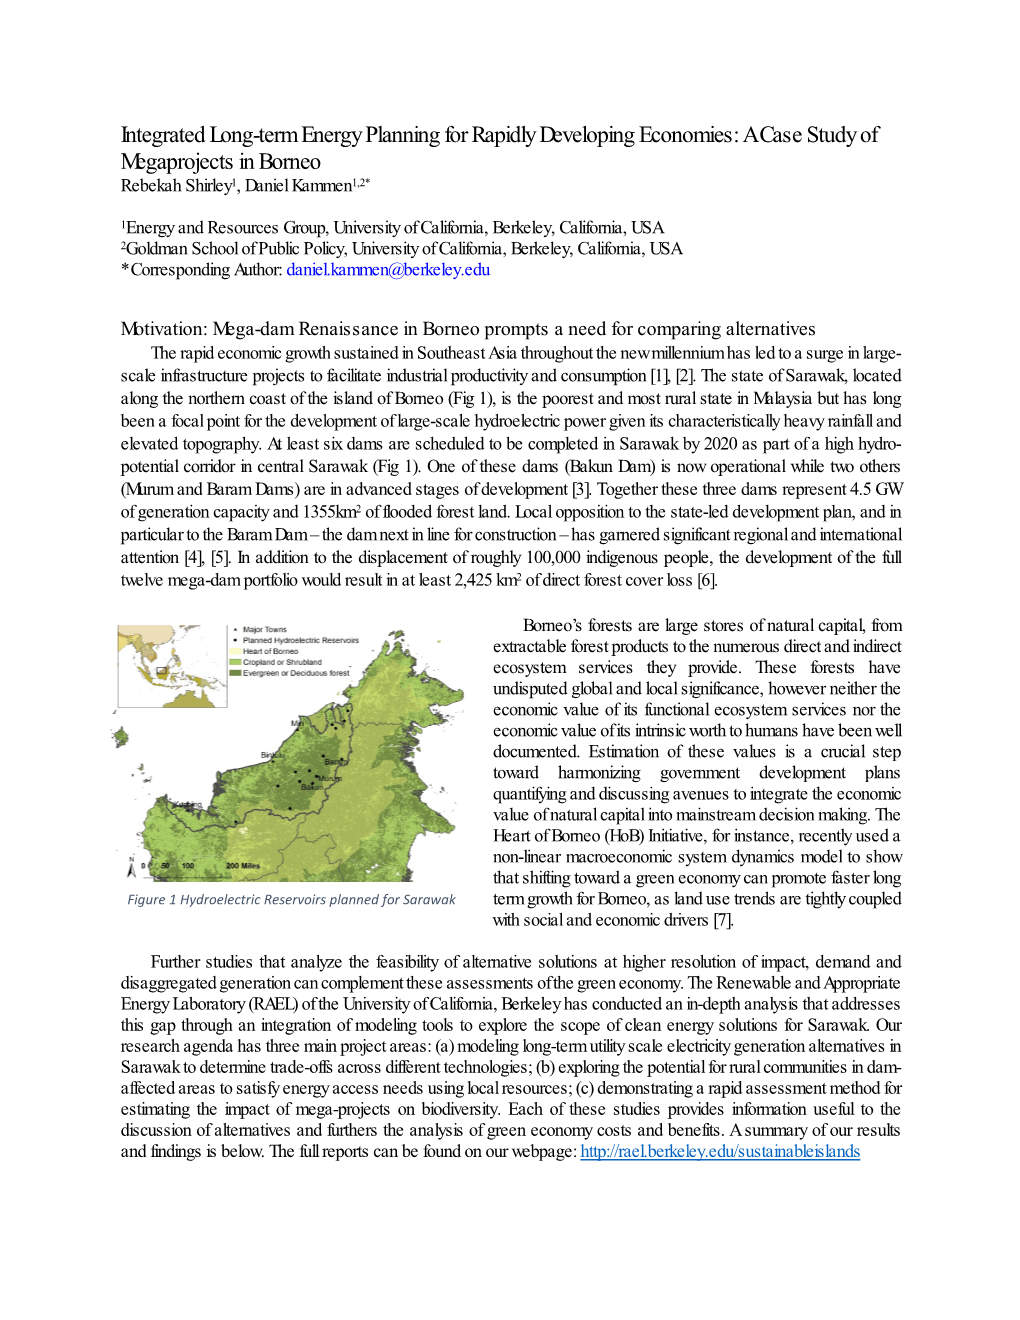 A Case Study of Megaprojects in Borneo Rebekah Shirley1, Daniel Kammen1,2*